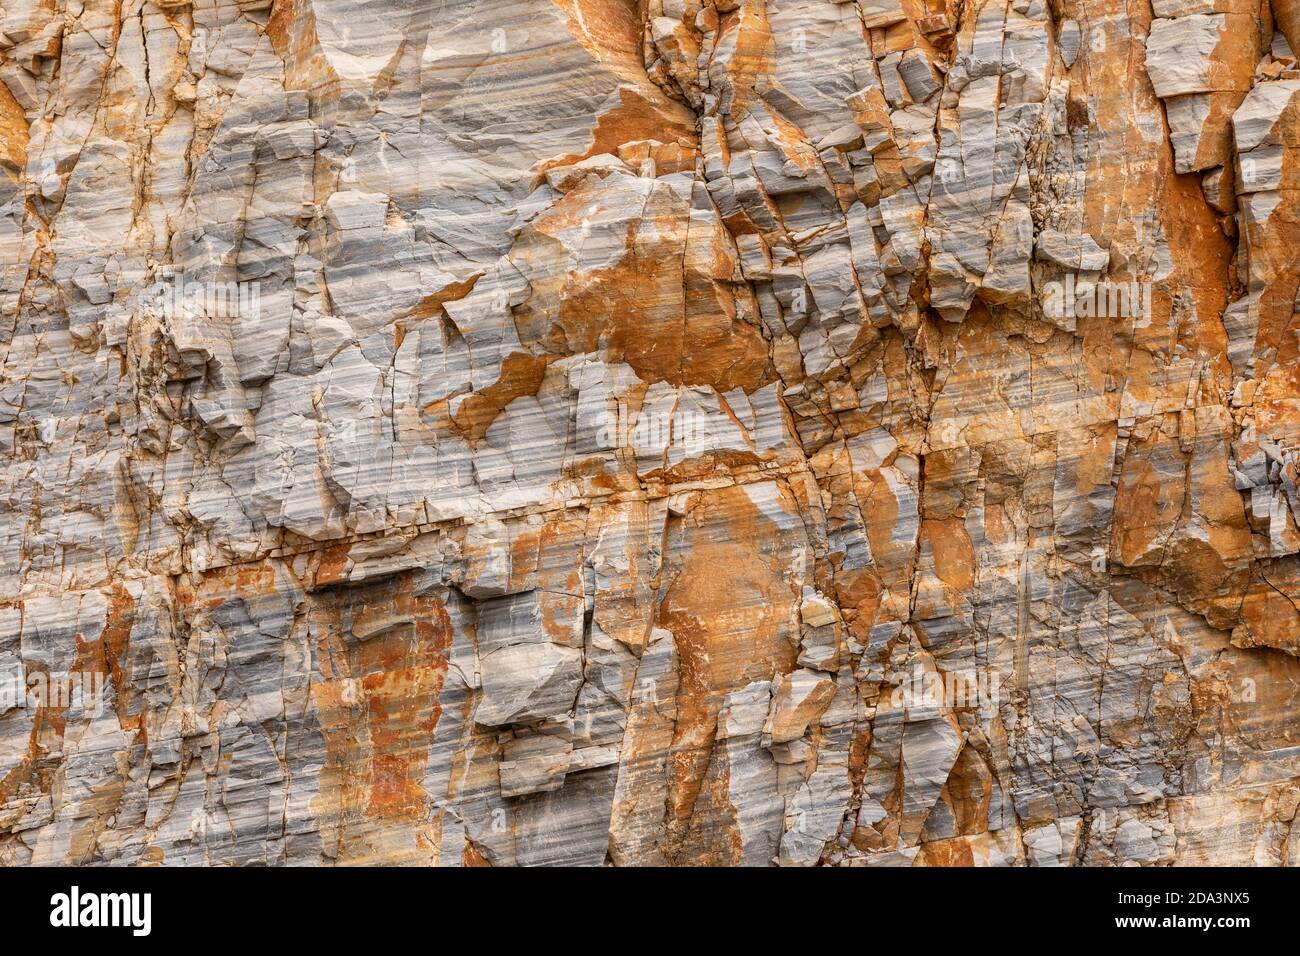 Superficie del marmo con tinta marrone, iOS, Grecia, Europa. Foto Stock